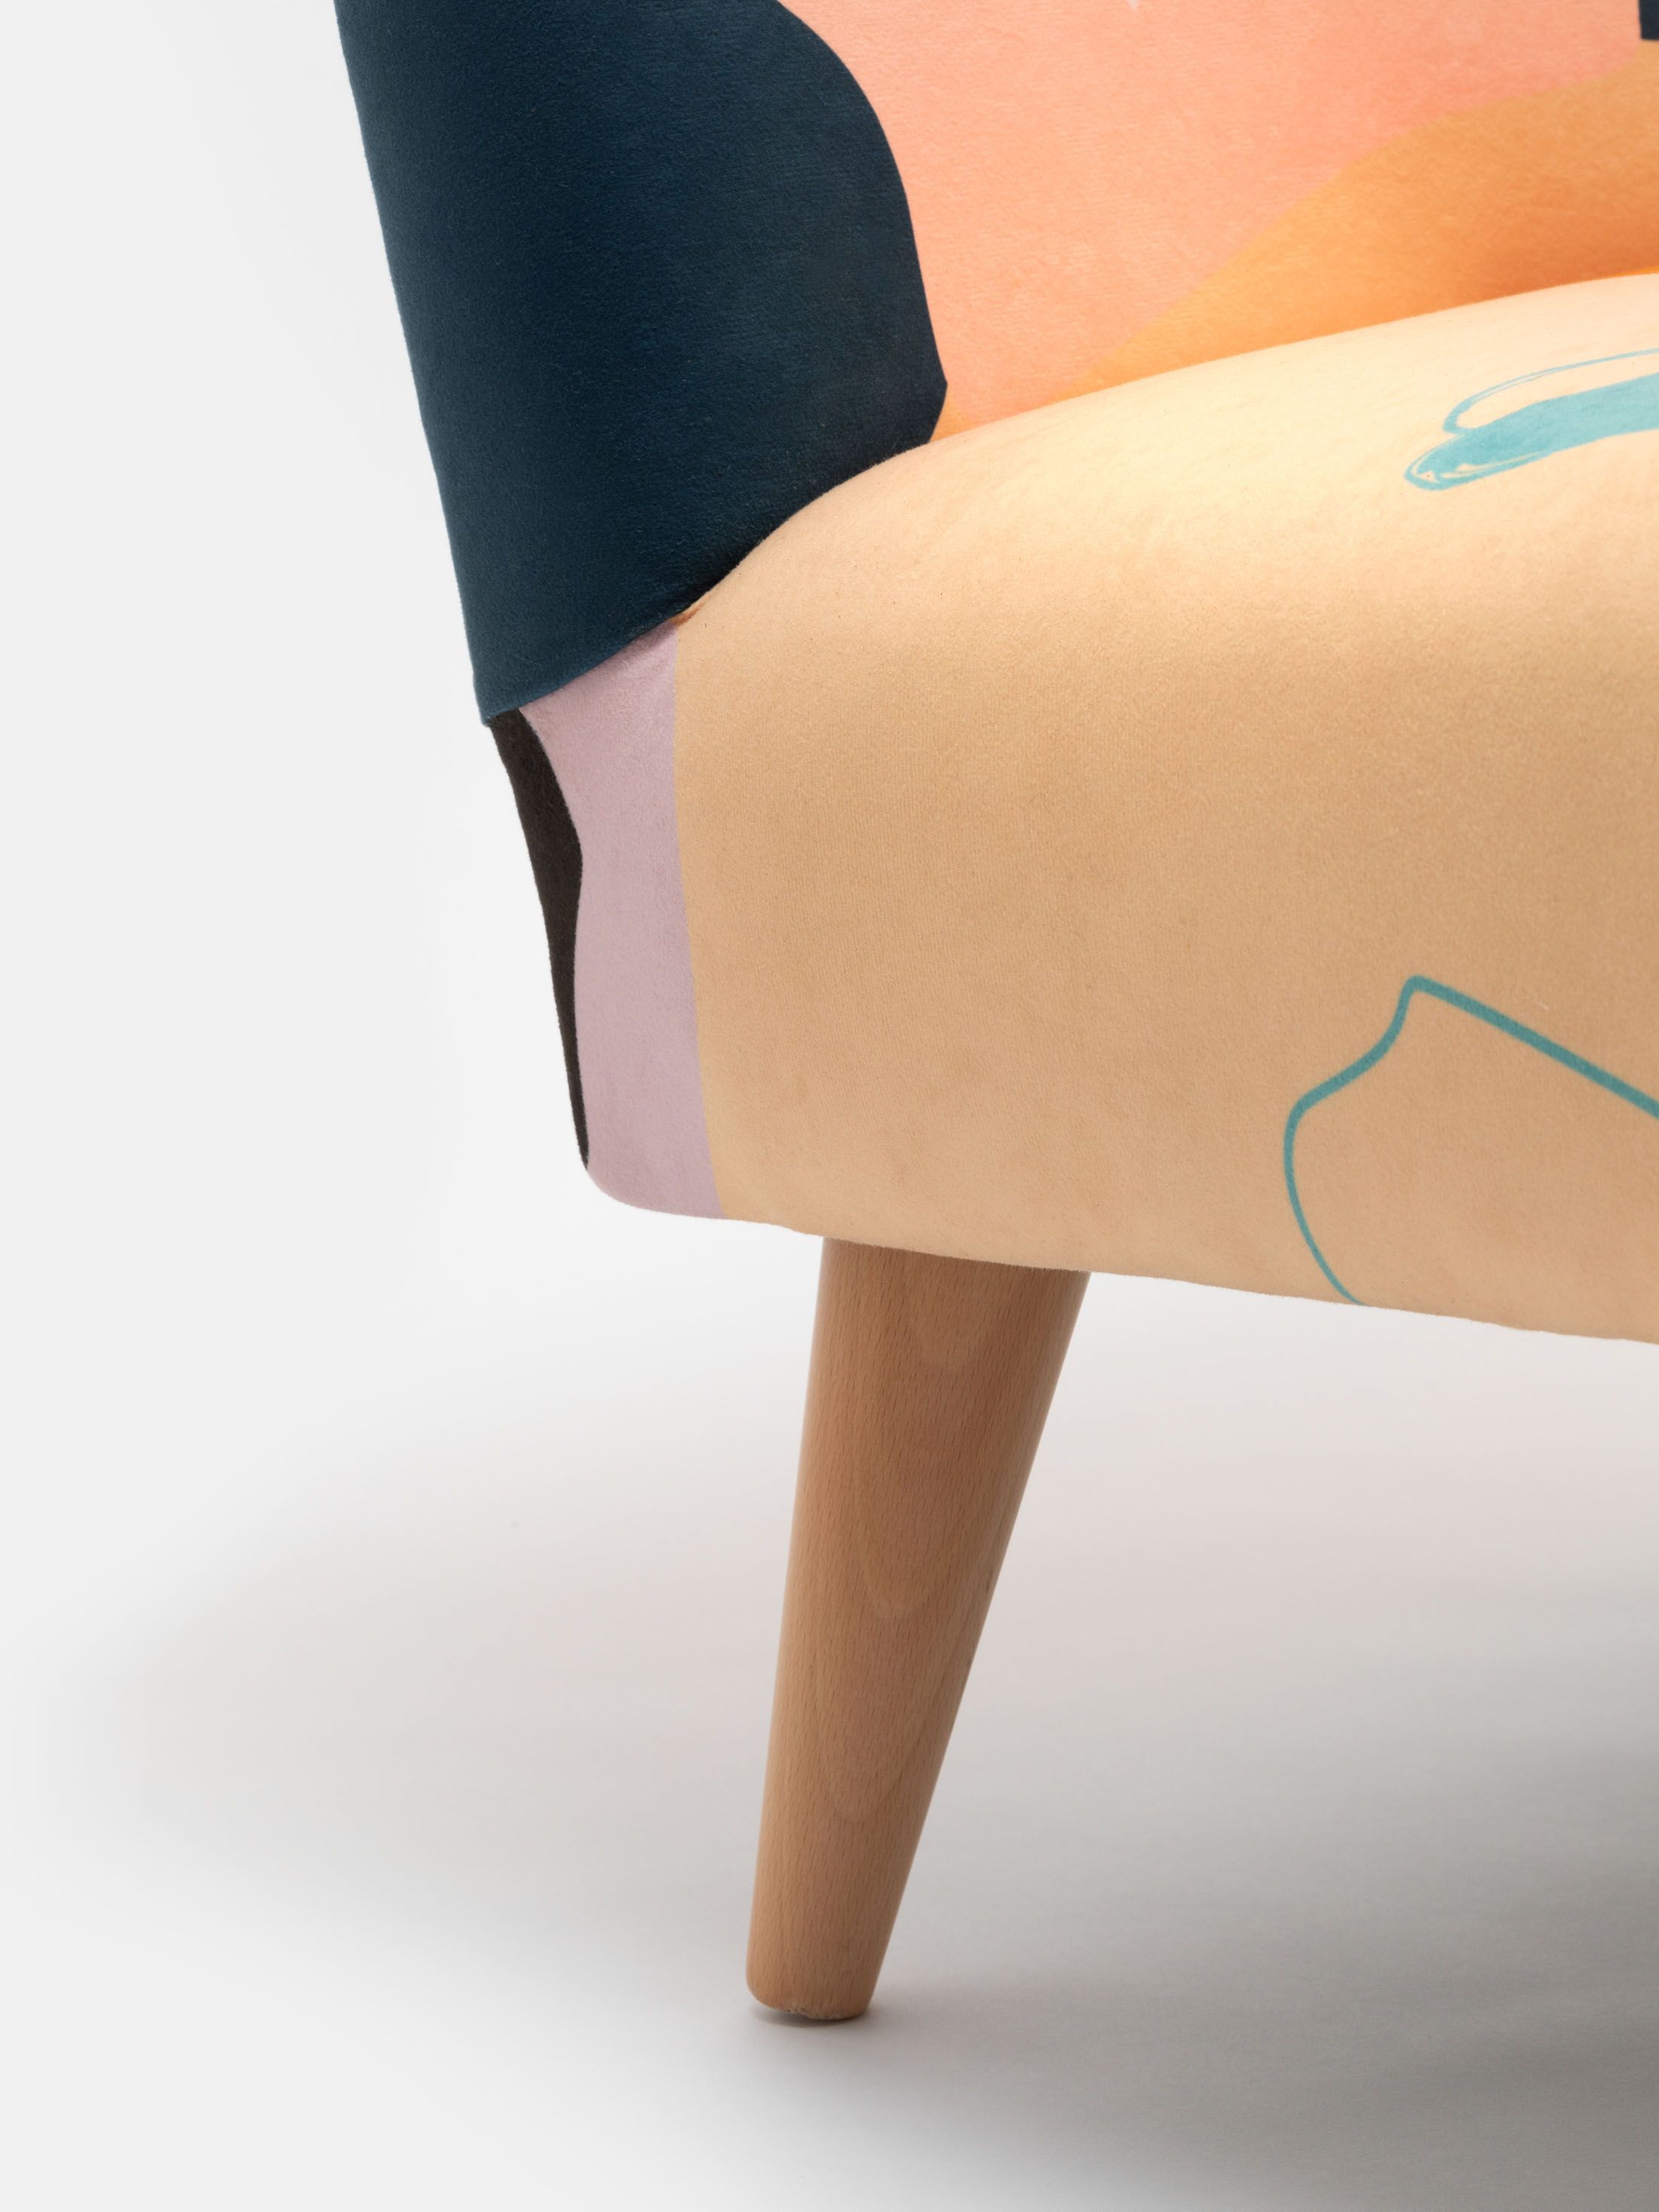 leg of bespoke chair